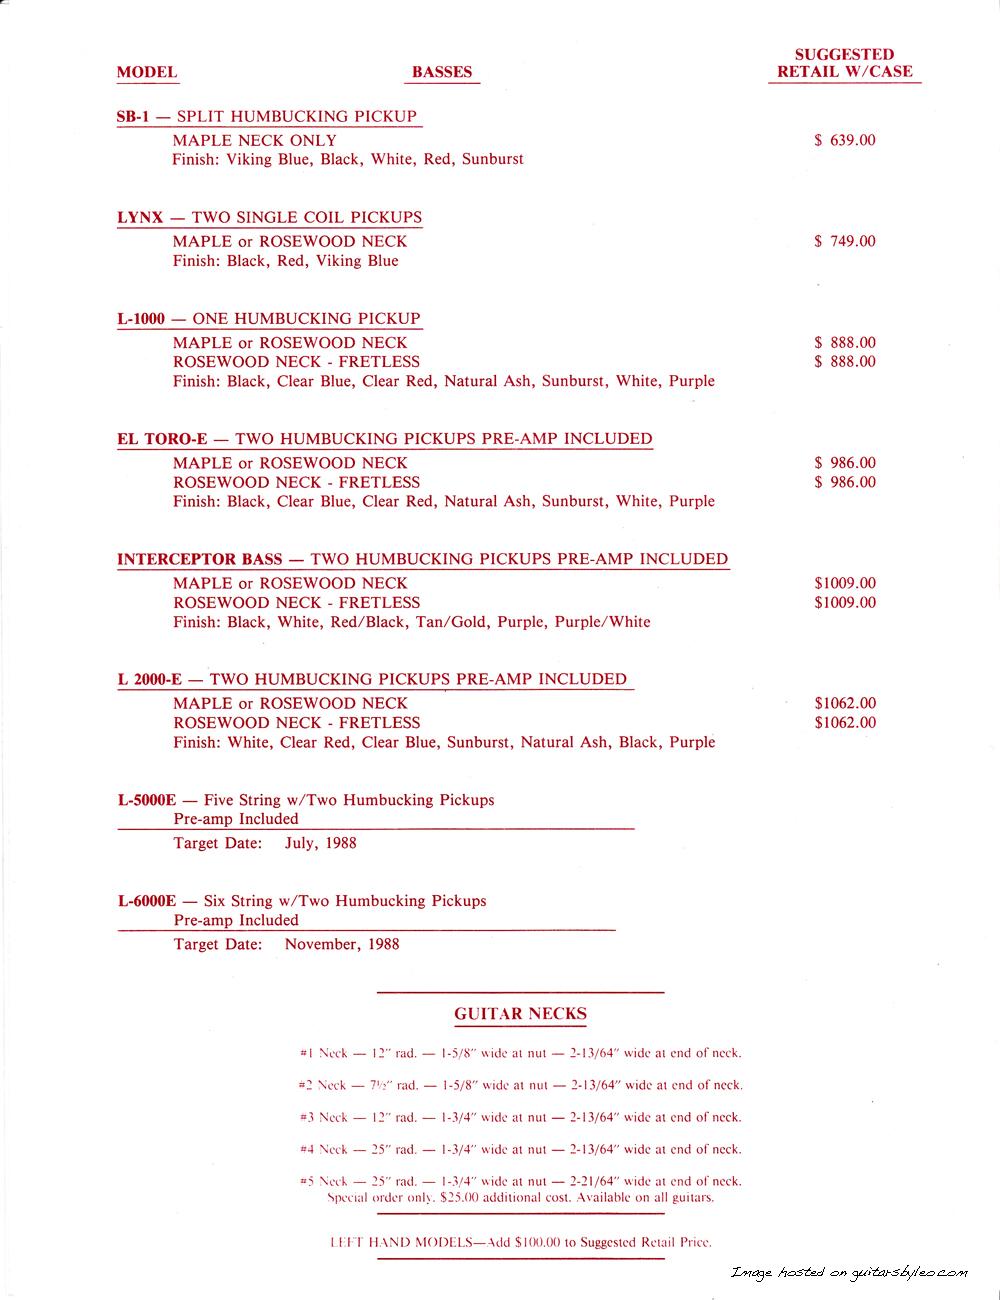 G&L June 15, 1988 Pricelist Page 2